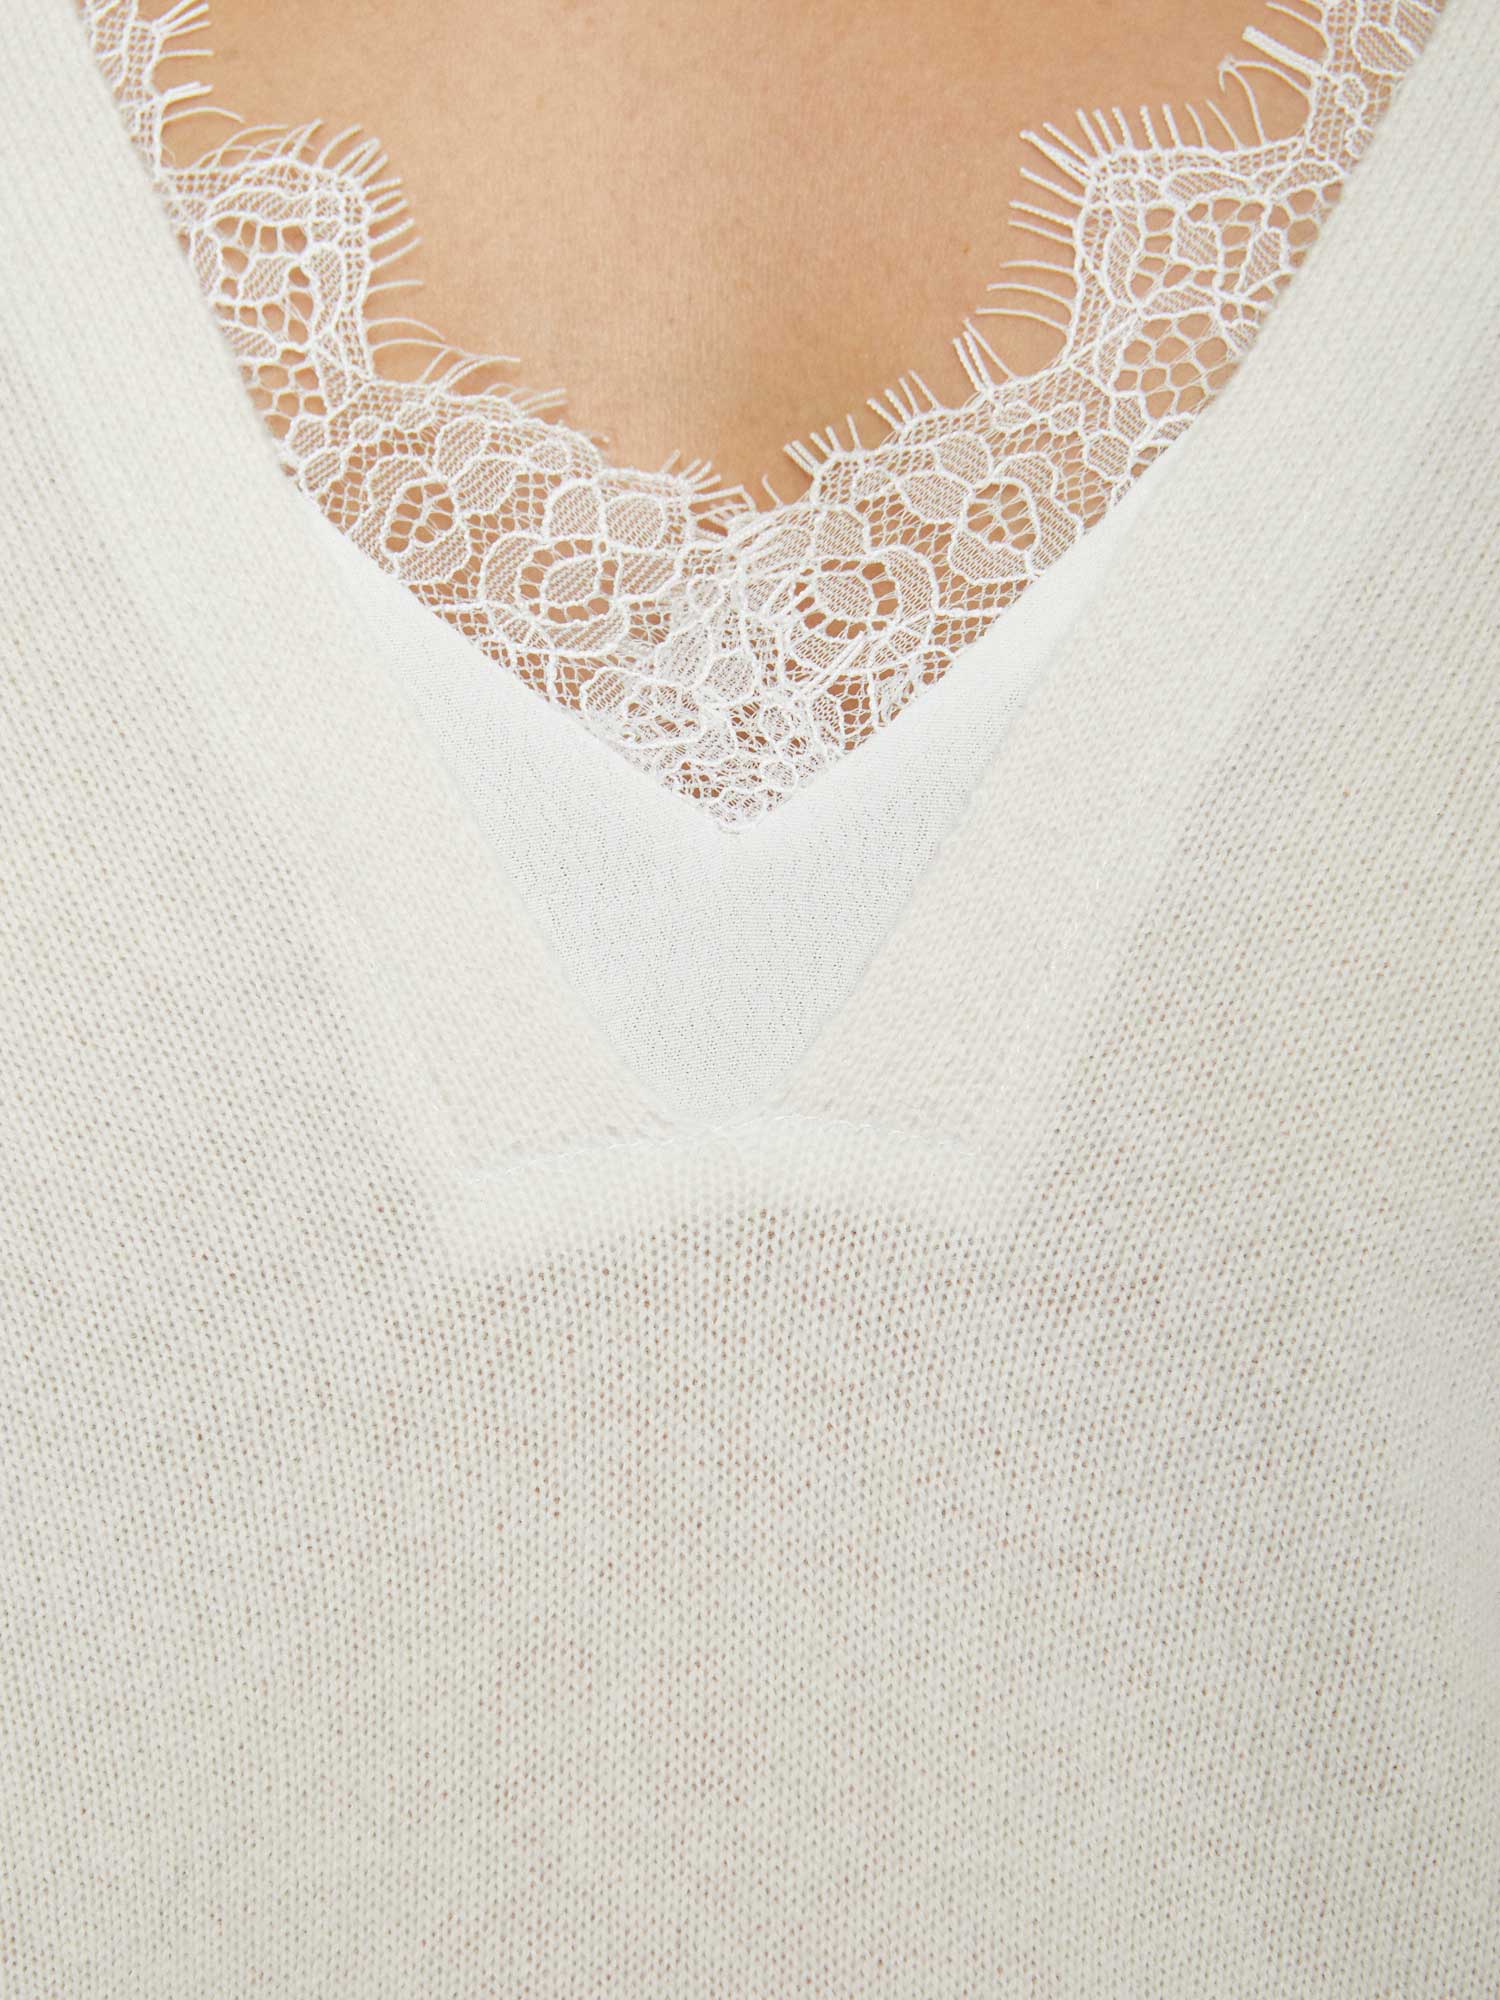 White lace layered v-neck sweater close up 2